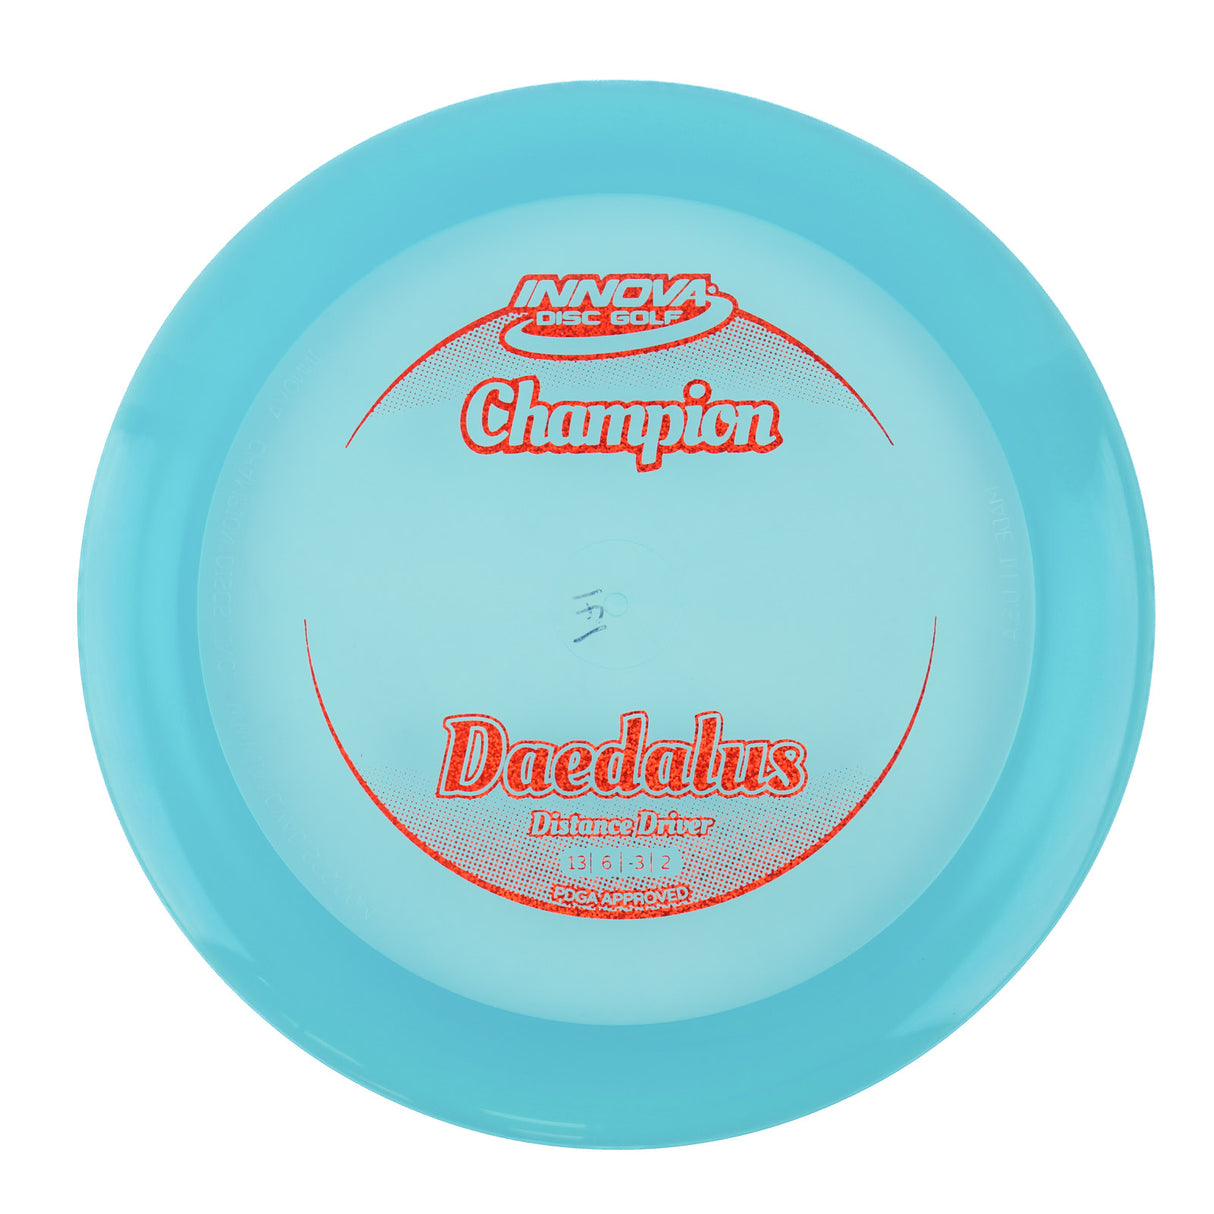 Innova Daedalus - Champion 171g | Style 0001